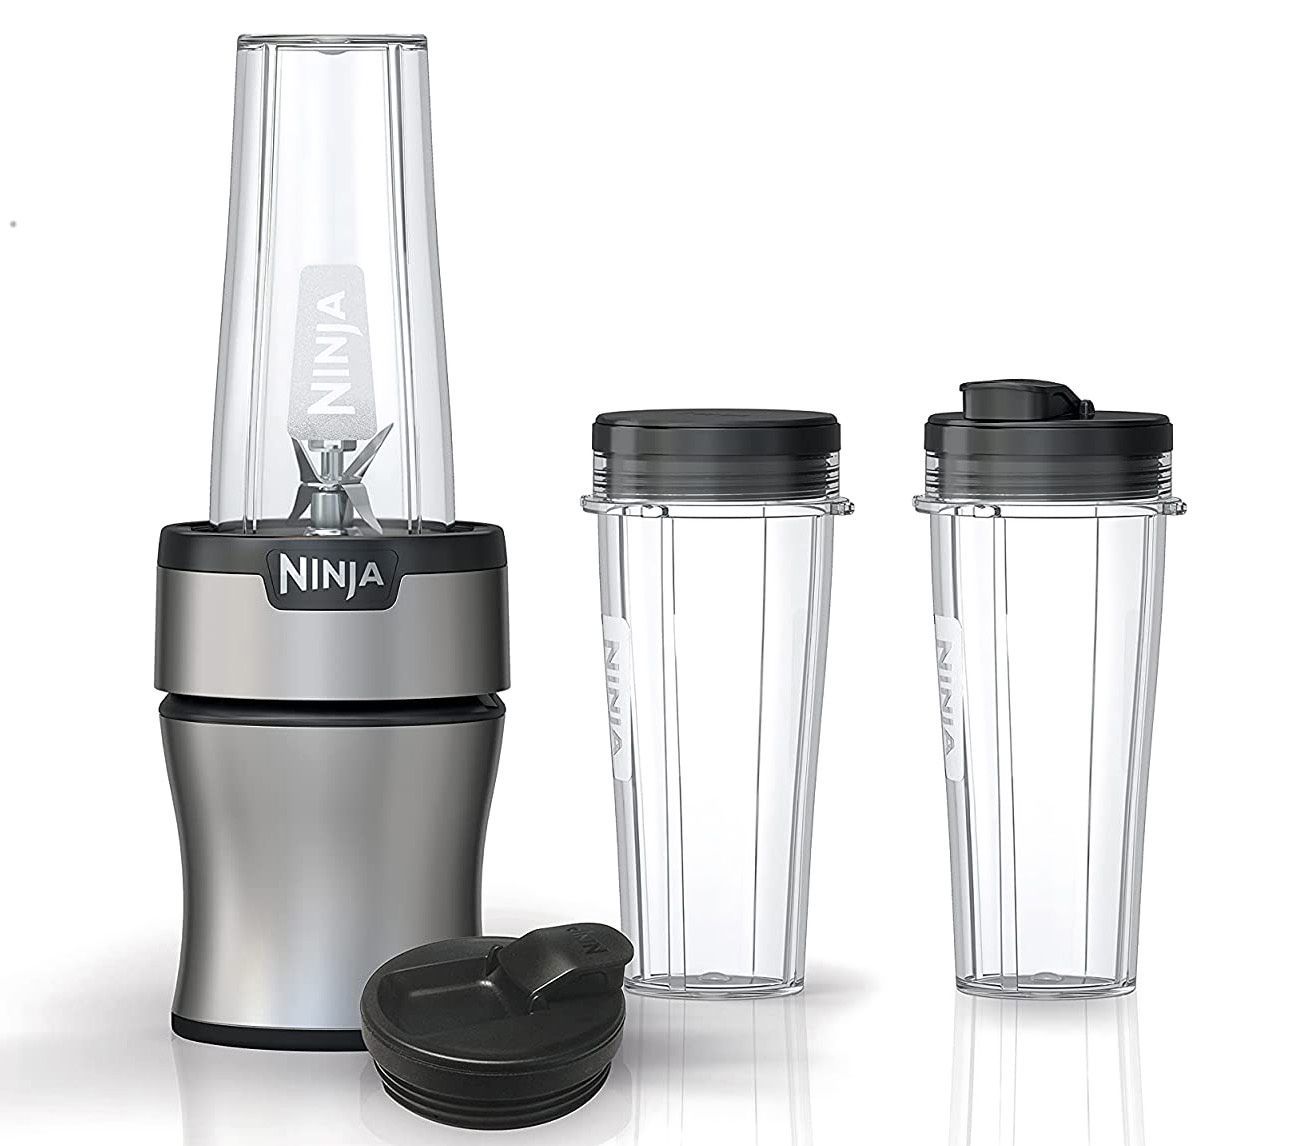 Ninja Nutri-Pro 1100W Personal Blender with Auto-iQ Technology on QVC 